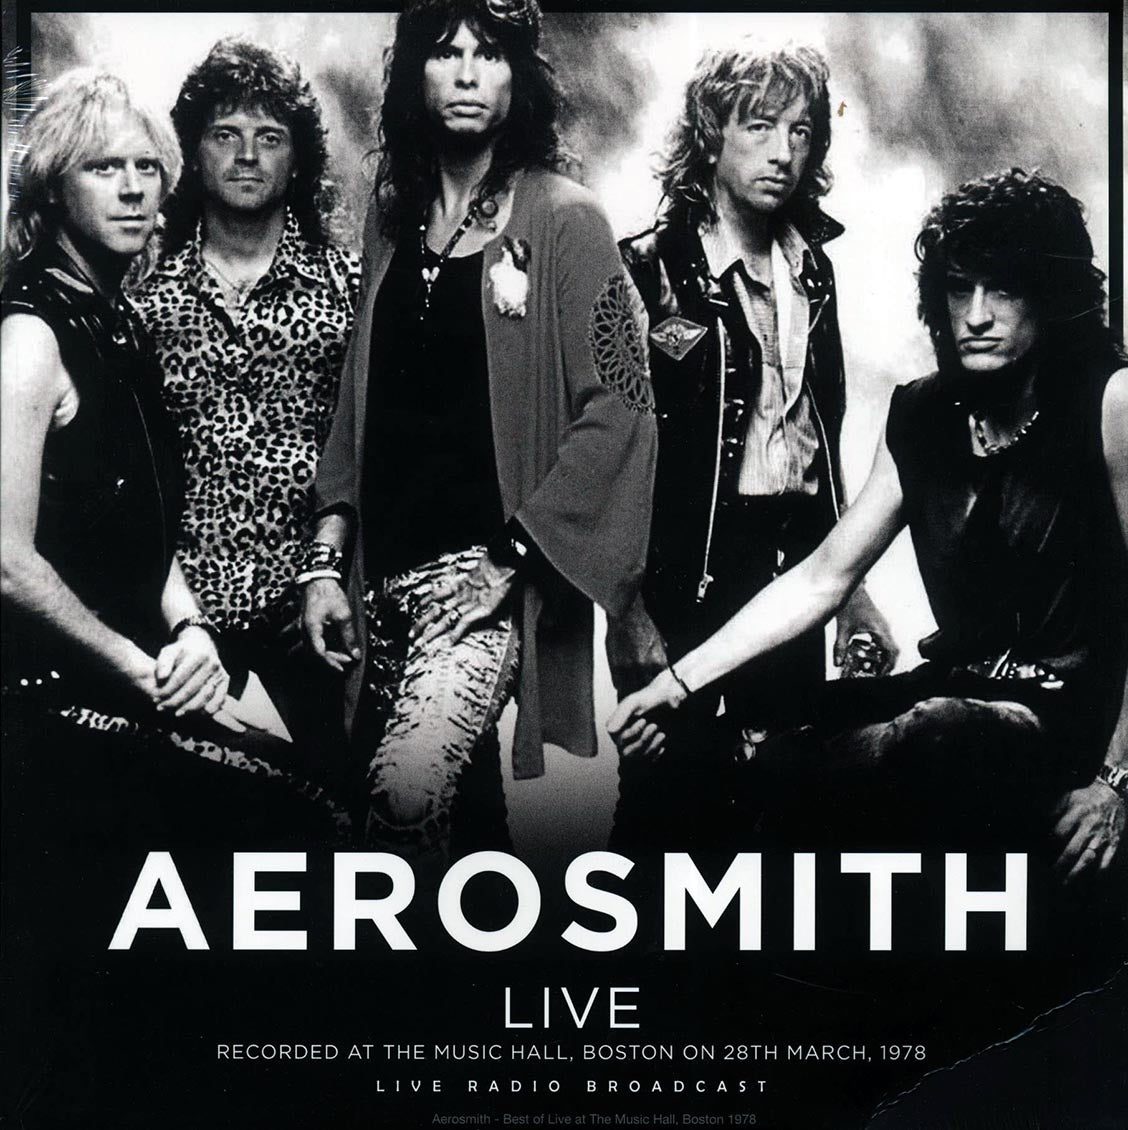 Aerosmith - Live: Recorded At The Music Hall, Boston, 28th March, 1978 - Vinyl LP